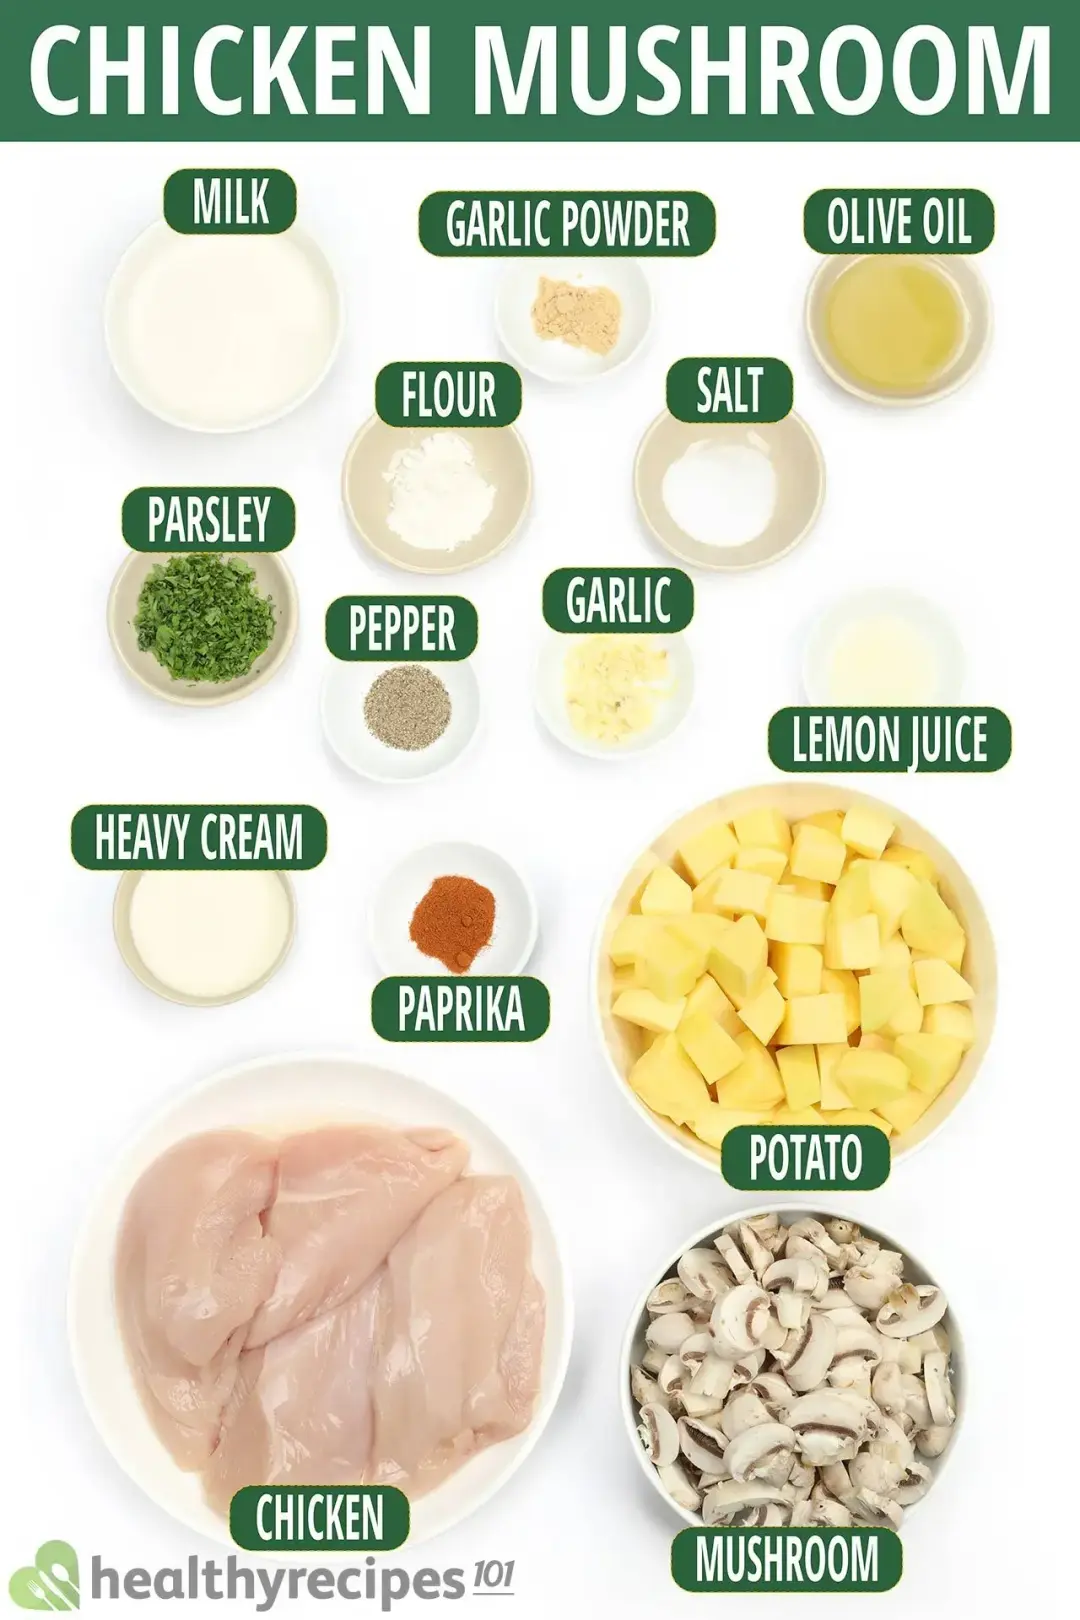 Ingredients for Mushroom Chicken